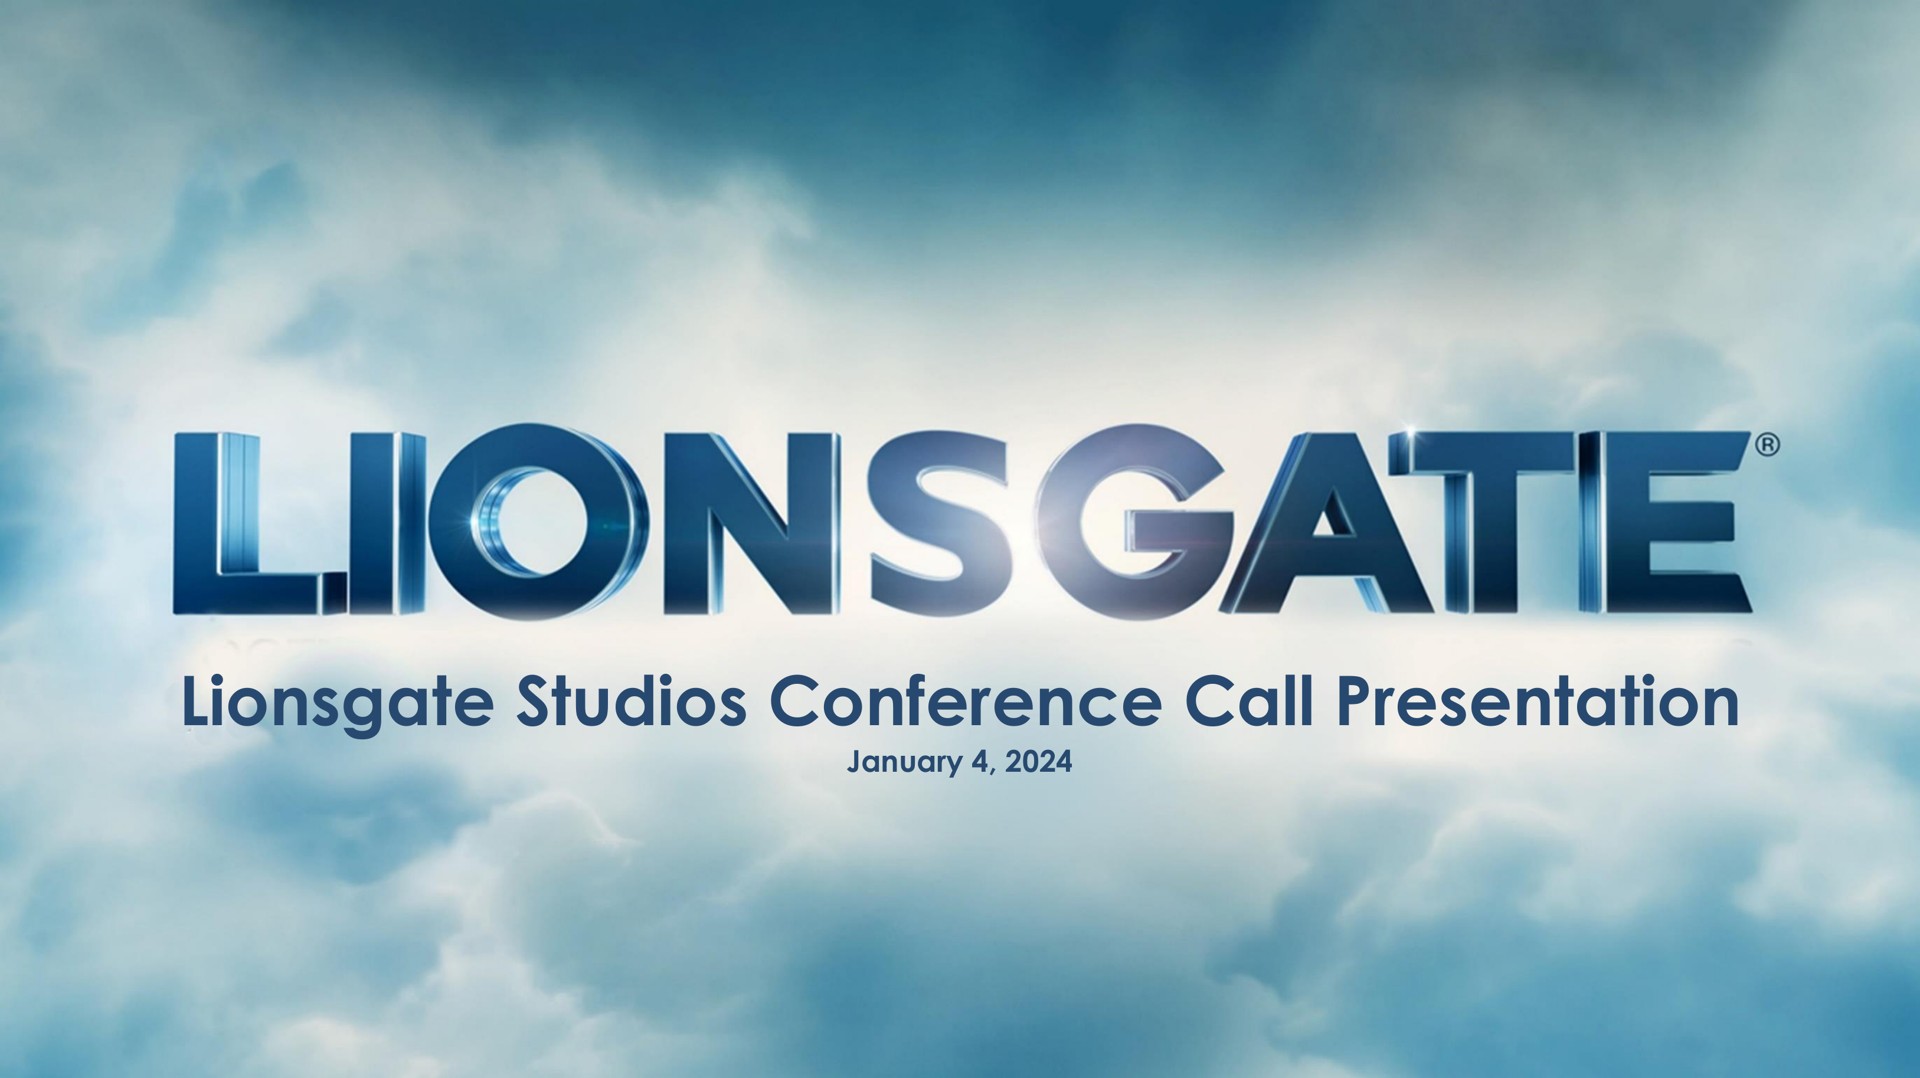 studios conference call presentation lions gate | Lionsgate